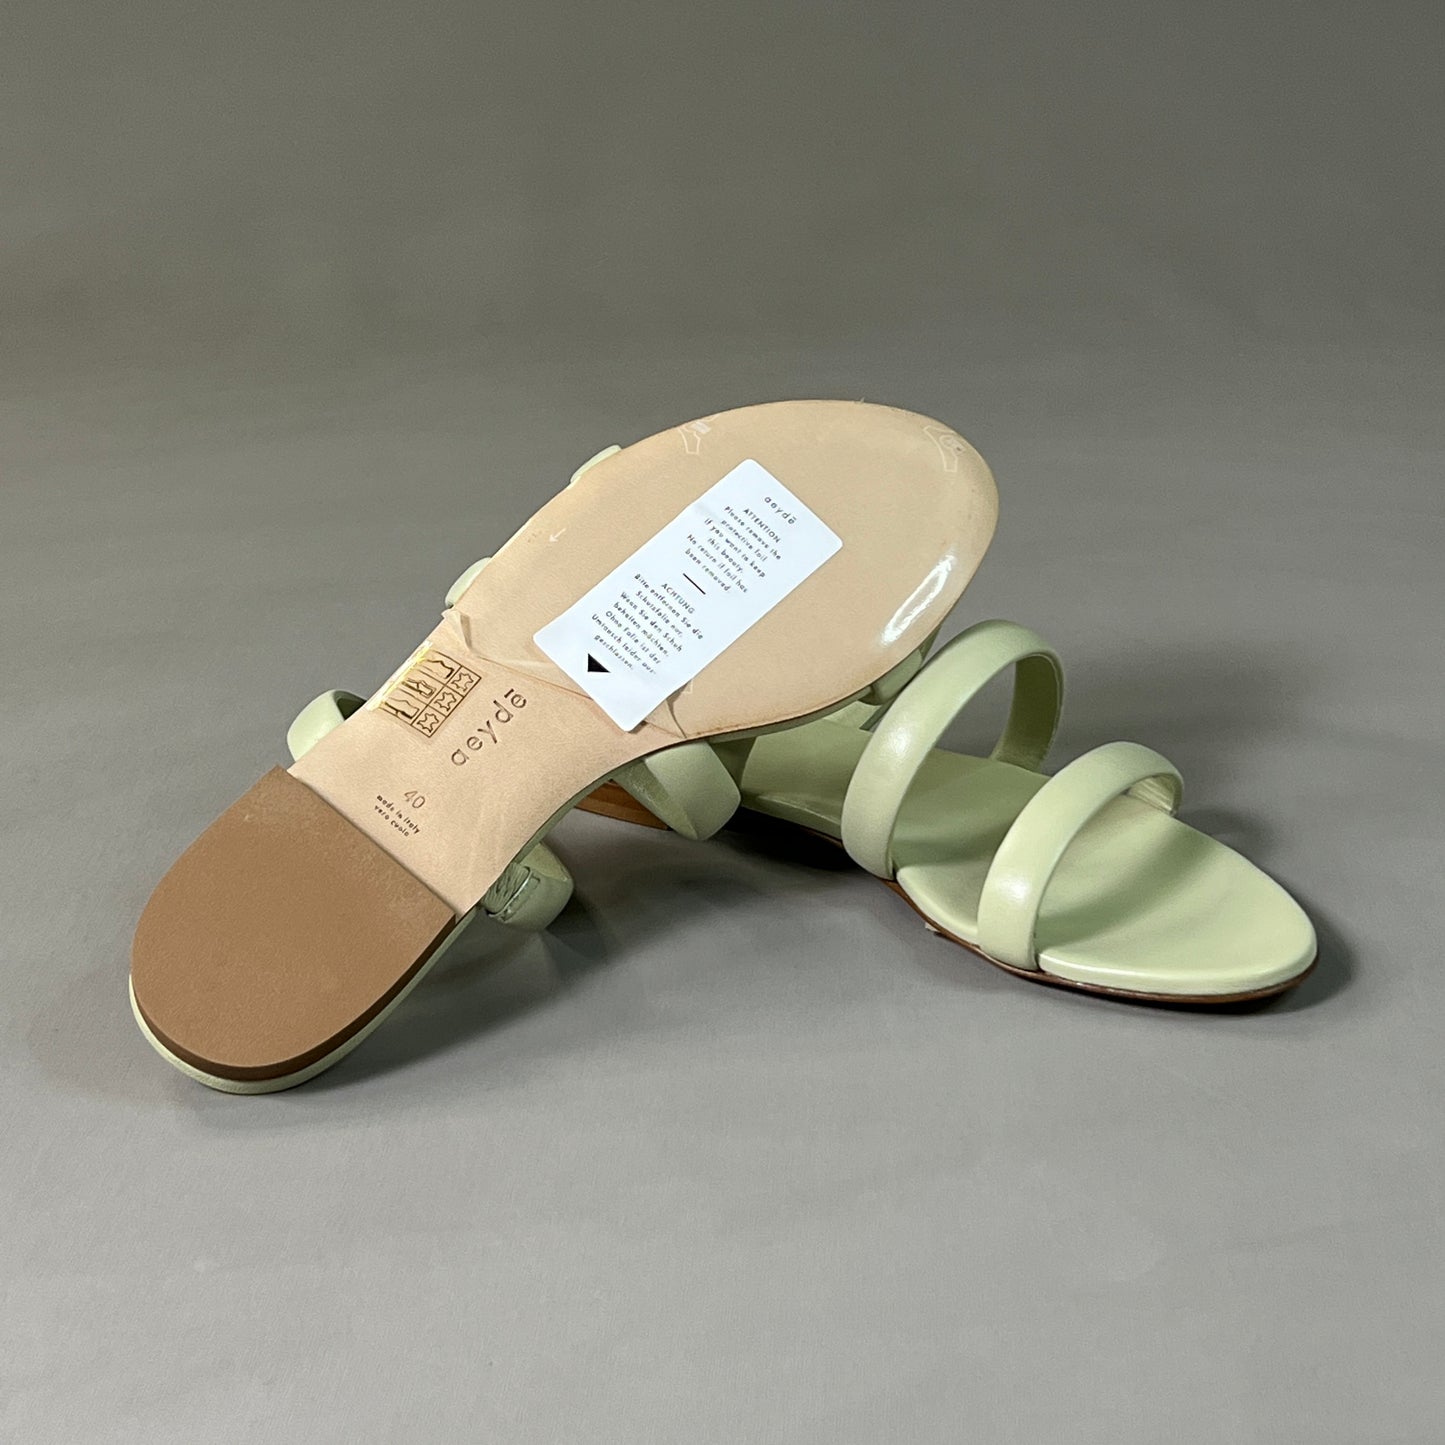 AEYDE Chrissy Pistachio Nappa Leather Sandals Women's Sz 10, EU 40, UK 7 Green (New)